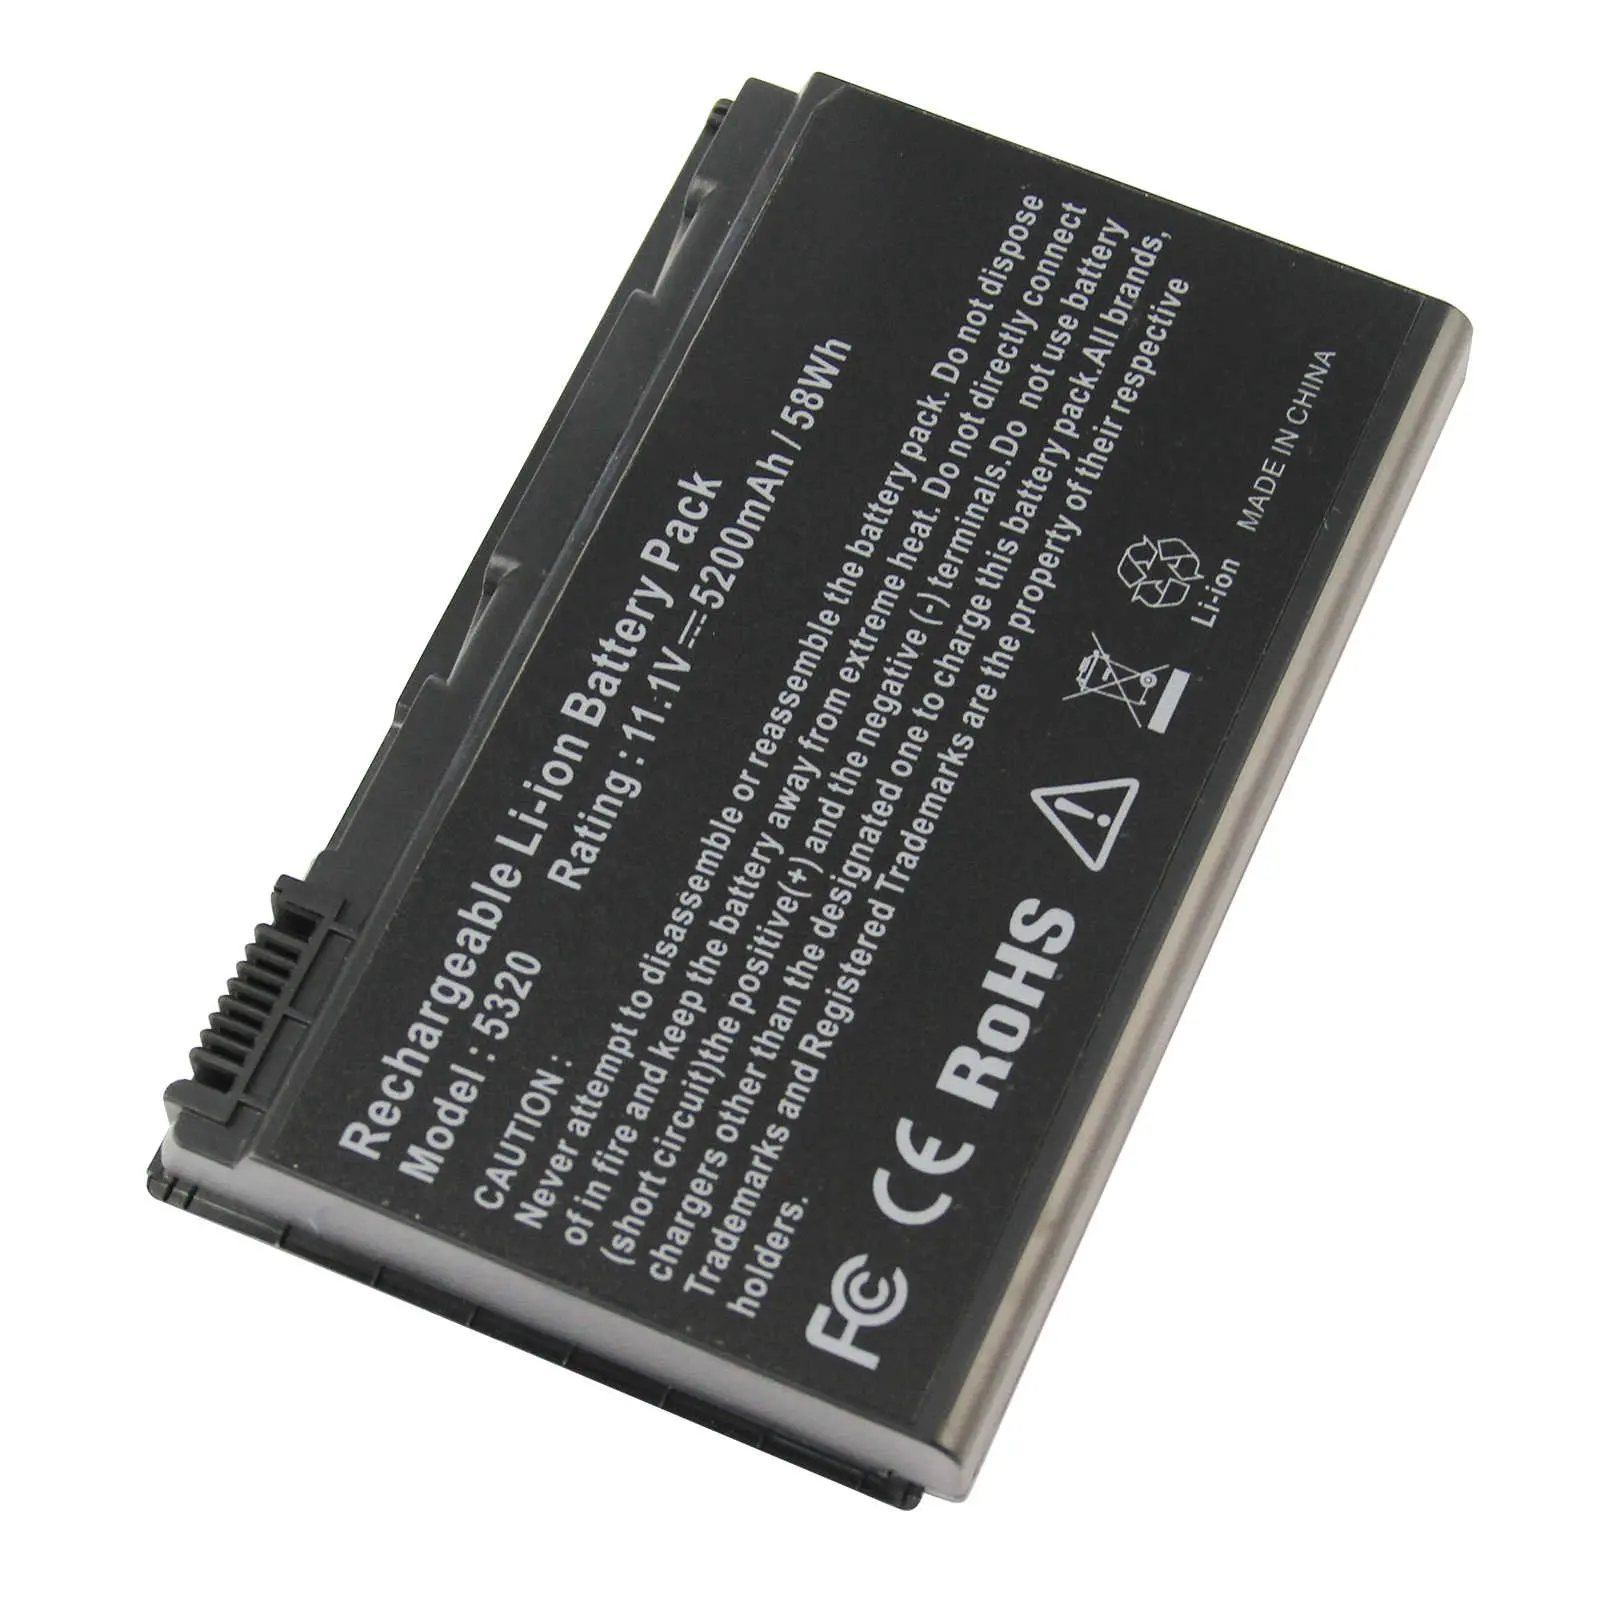 Replacement Laptop Battery for Acer TM00741 TM00751 GRAPE34 Extensa 5210 5220 5610 5630 5230 5310 5320 5430 7220 7620 Batteries